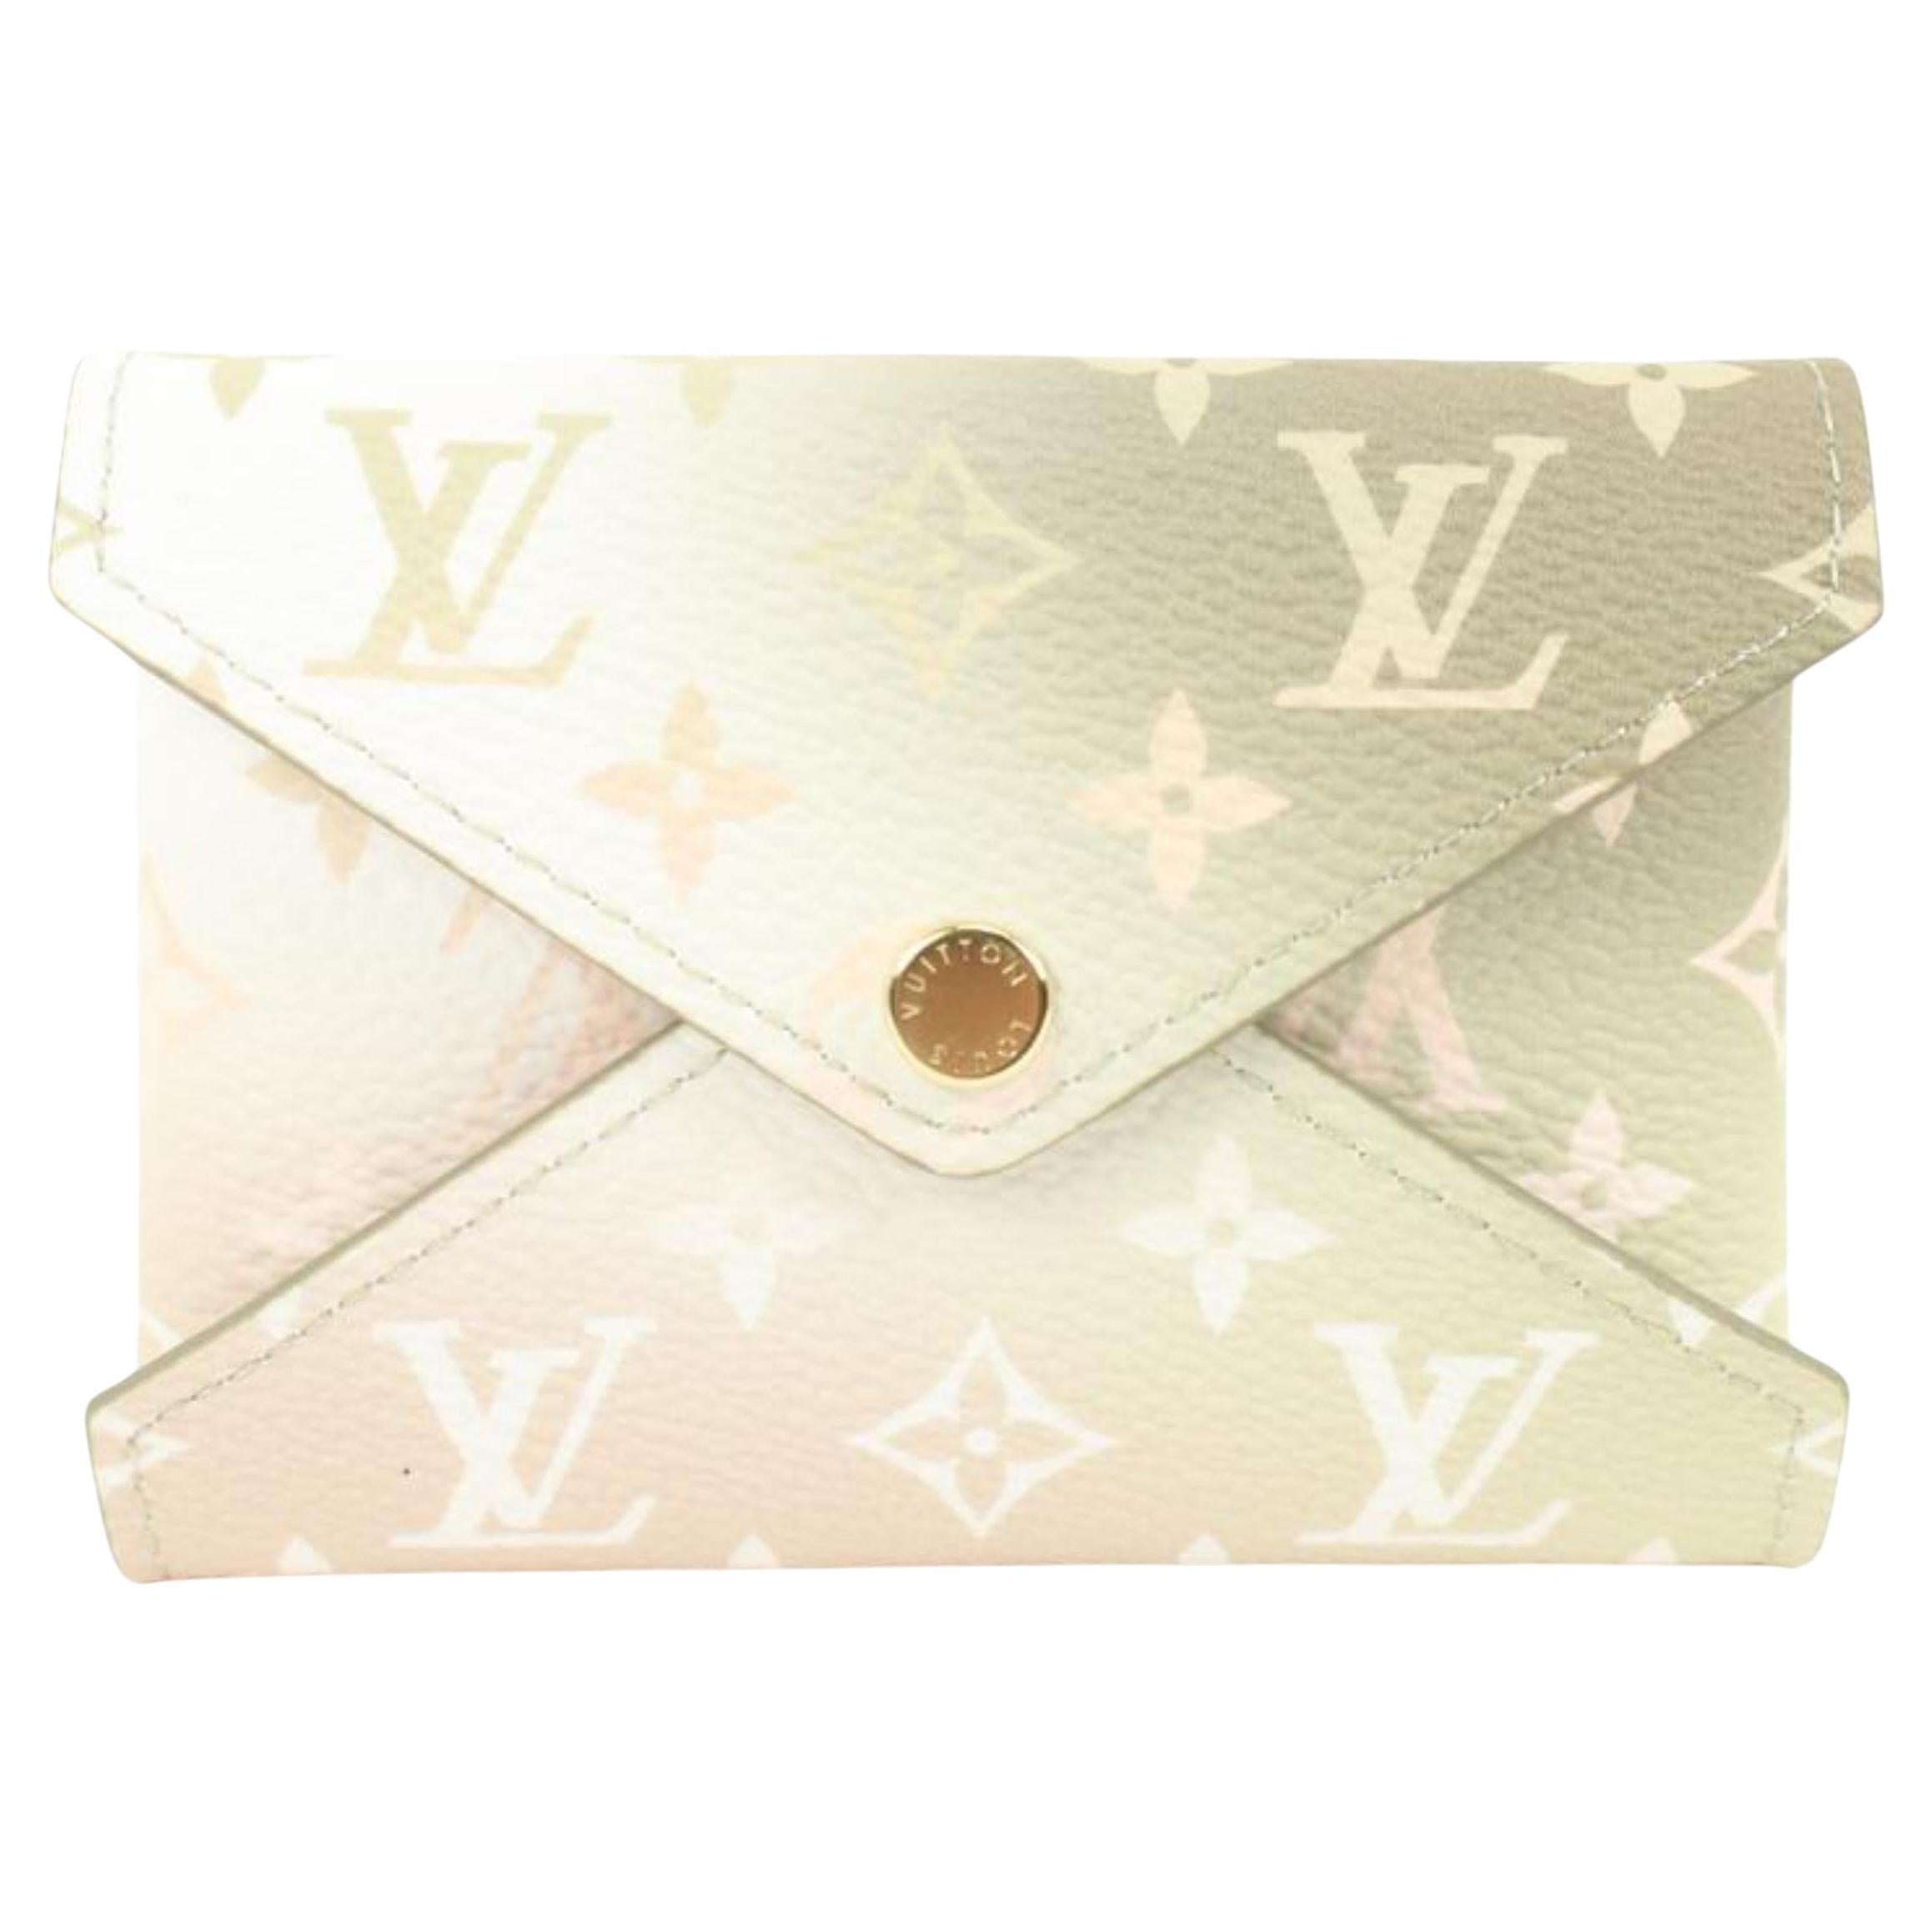 Louis Vuitton Kirigami PM Envelope Pouch